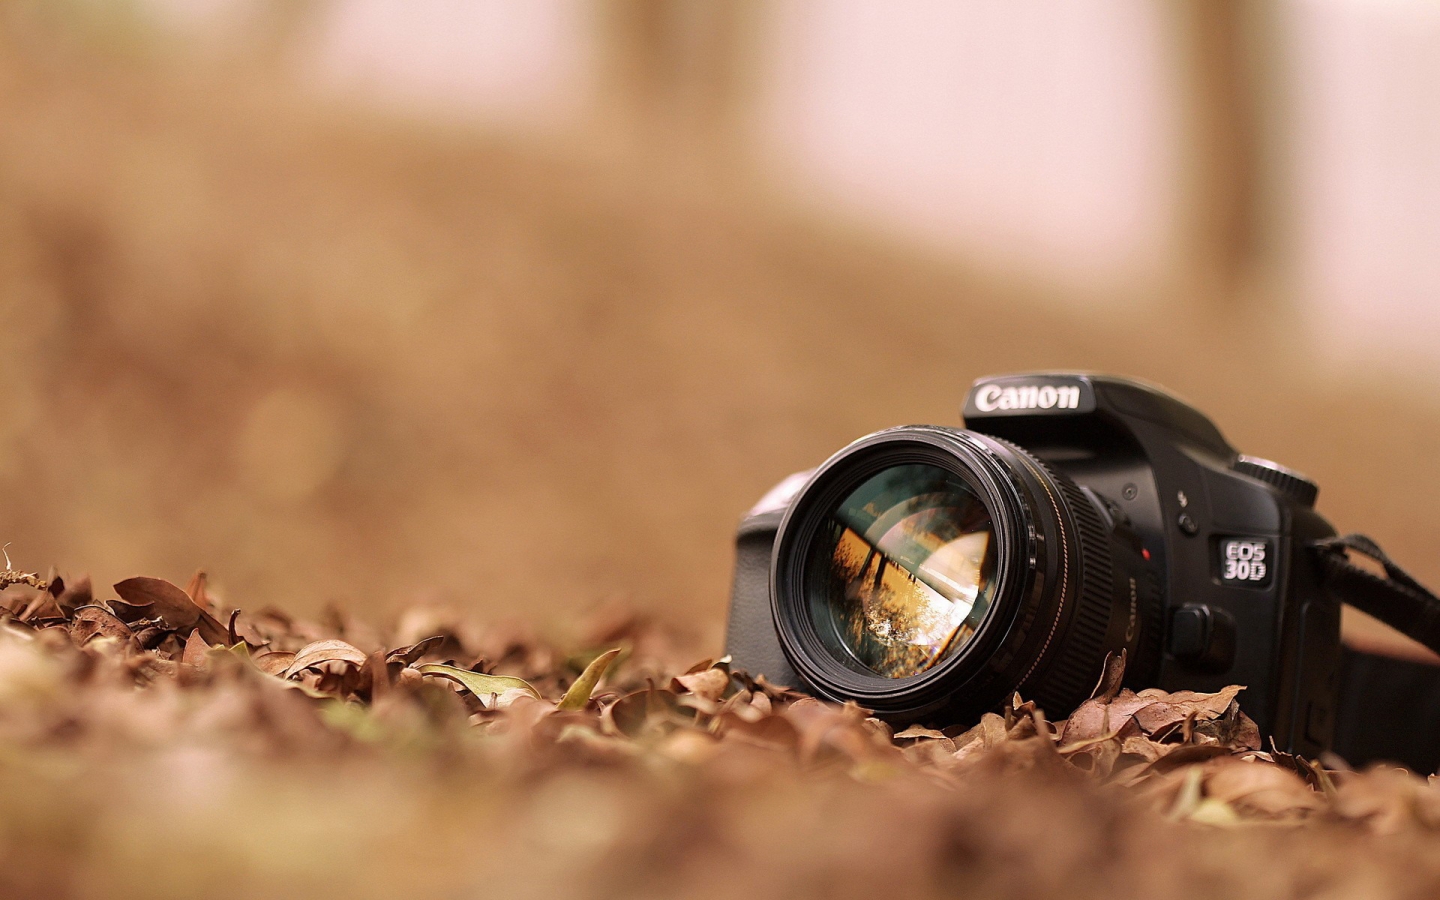 Canon EOS 30D for 1440 x 900 widescreen resolution